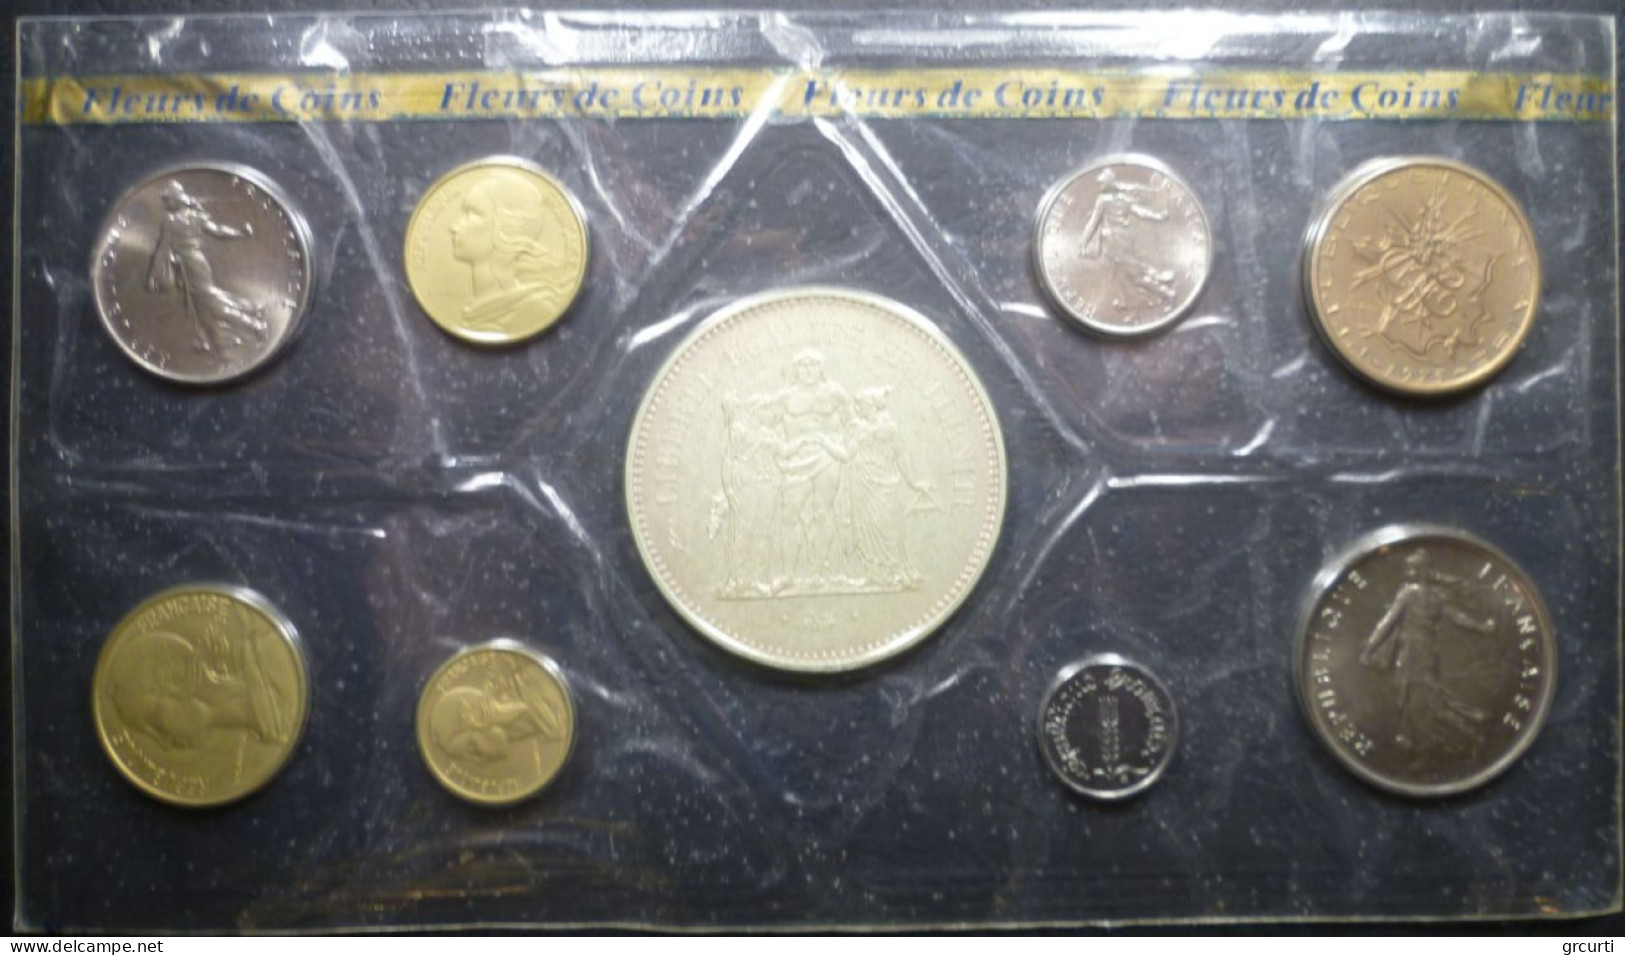 Francia - Set Fleurs De Coins 1975 - KM# SS12 - BU, Proofs & Presentation Cases